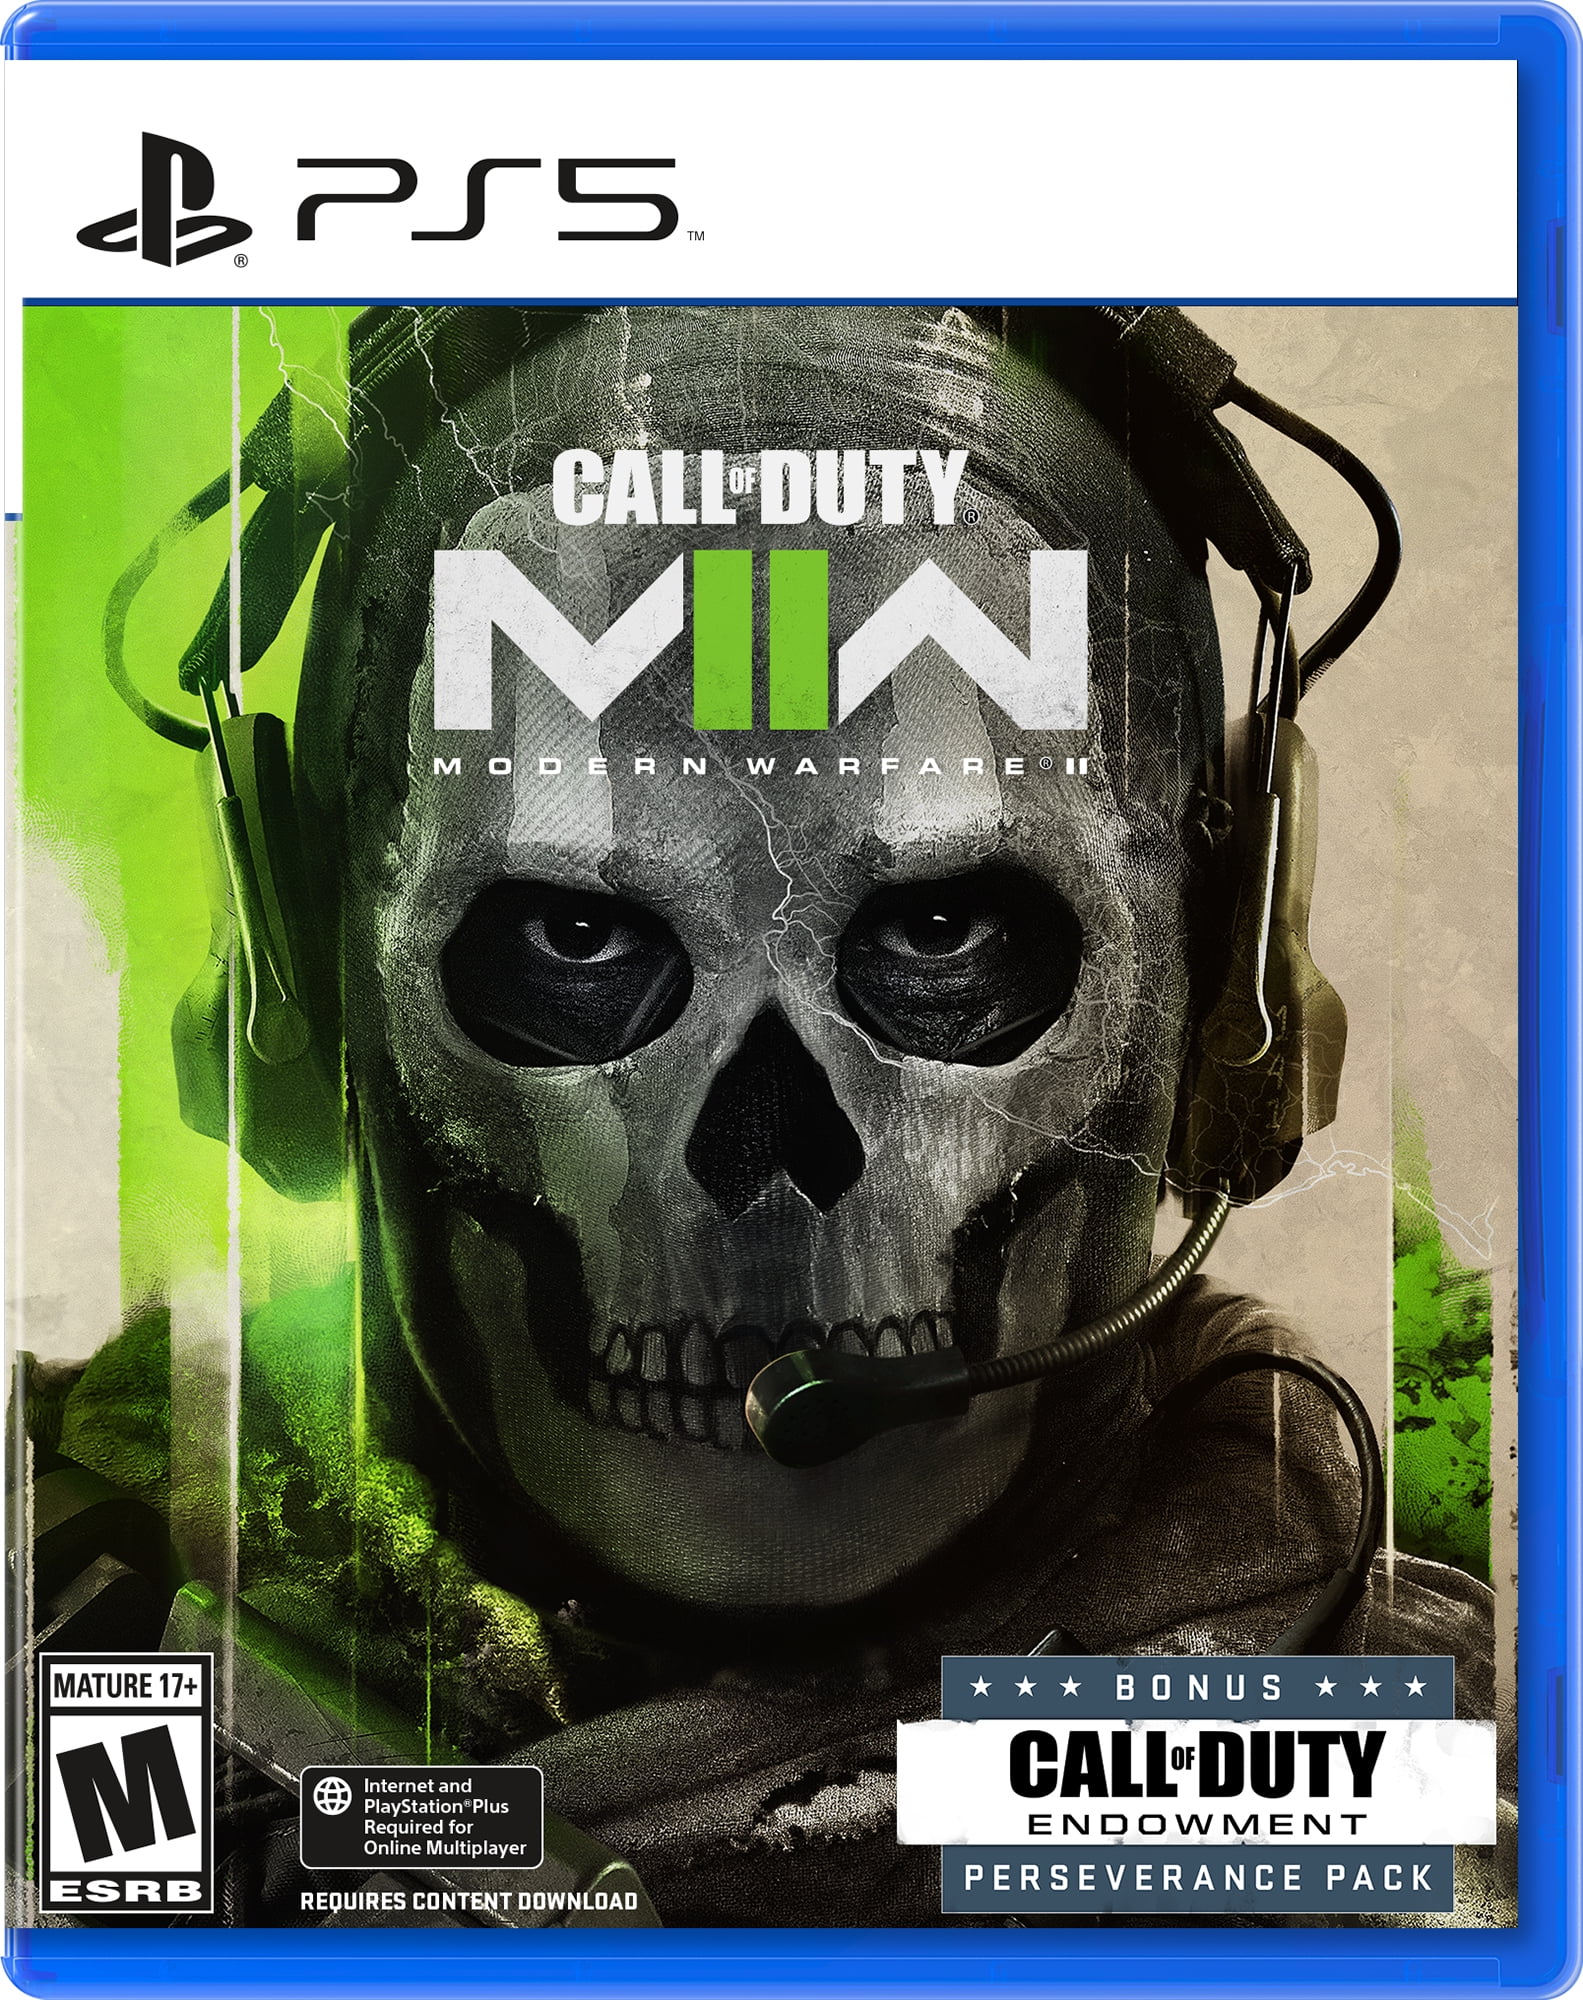 Call of Duty: Modern Warfare II: C.O.D.E. Edition - PlayStation 5